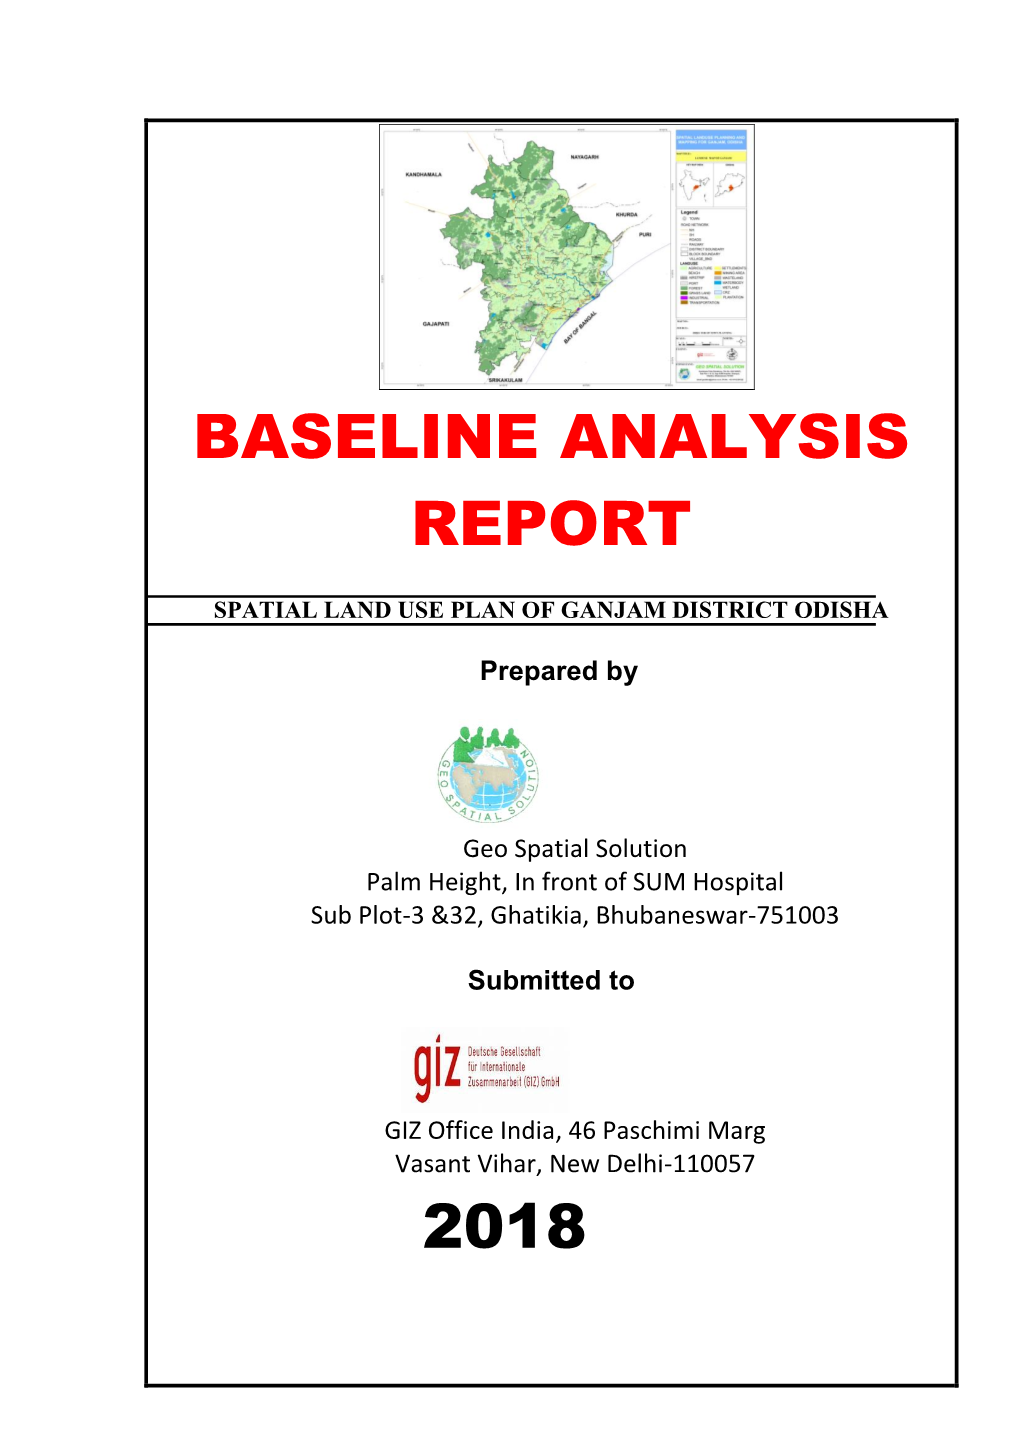 Baseline Report for Landuse Planning